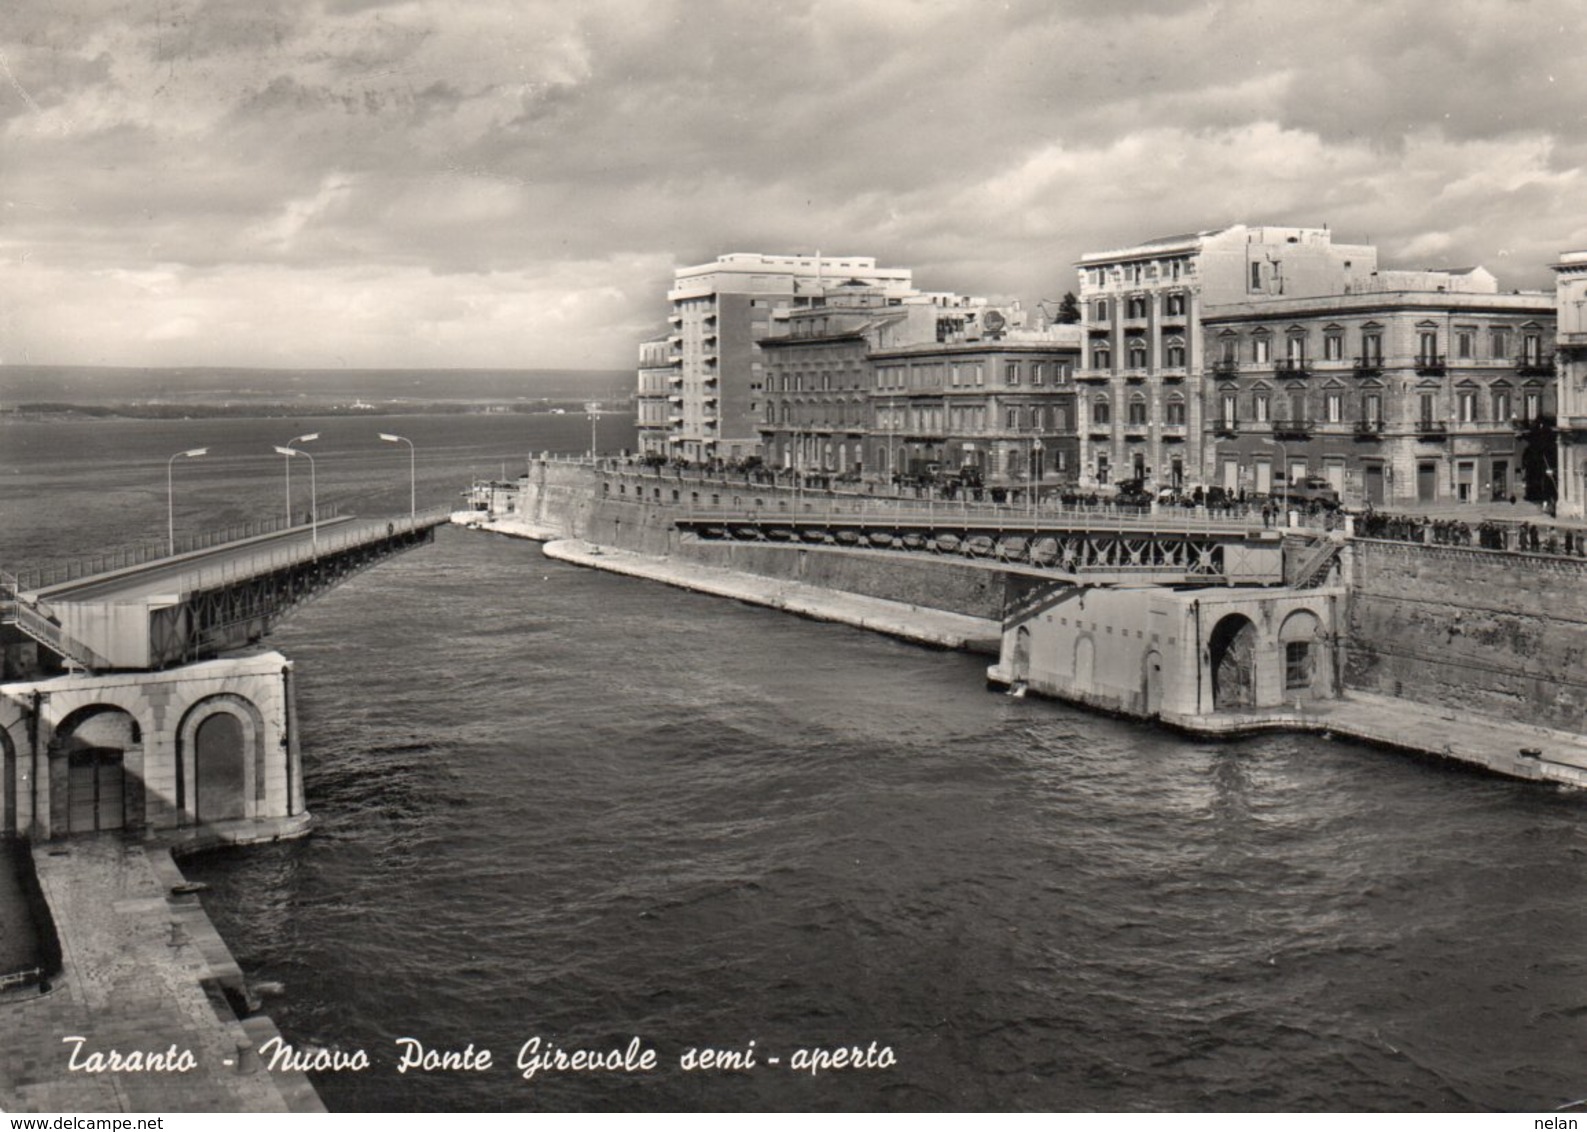 TARANTO IL NUOVO PONTE GIREVOLE SEMI-APERTO-VIAGGIATA 1960-VERA FOTOGRAFIA - Taranto